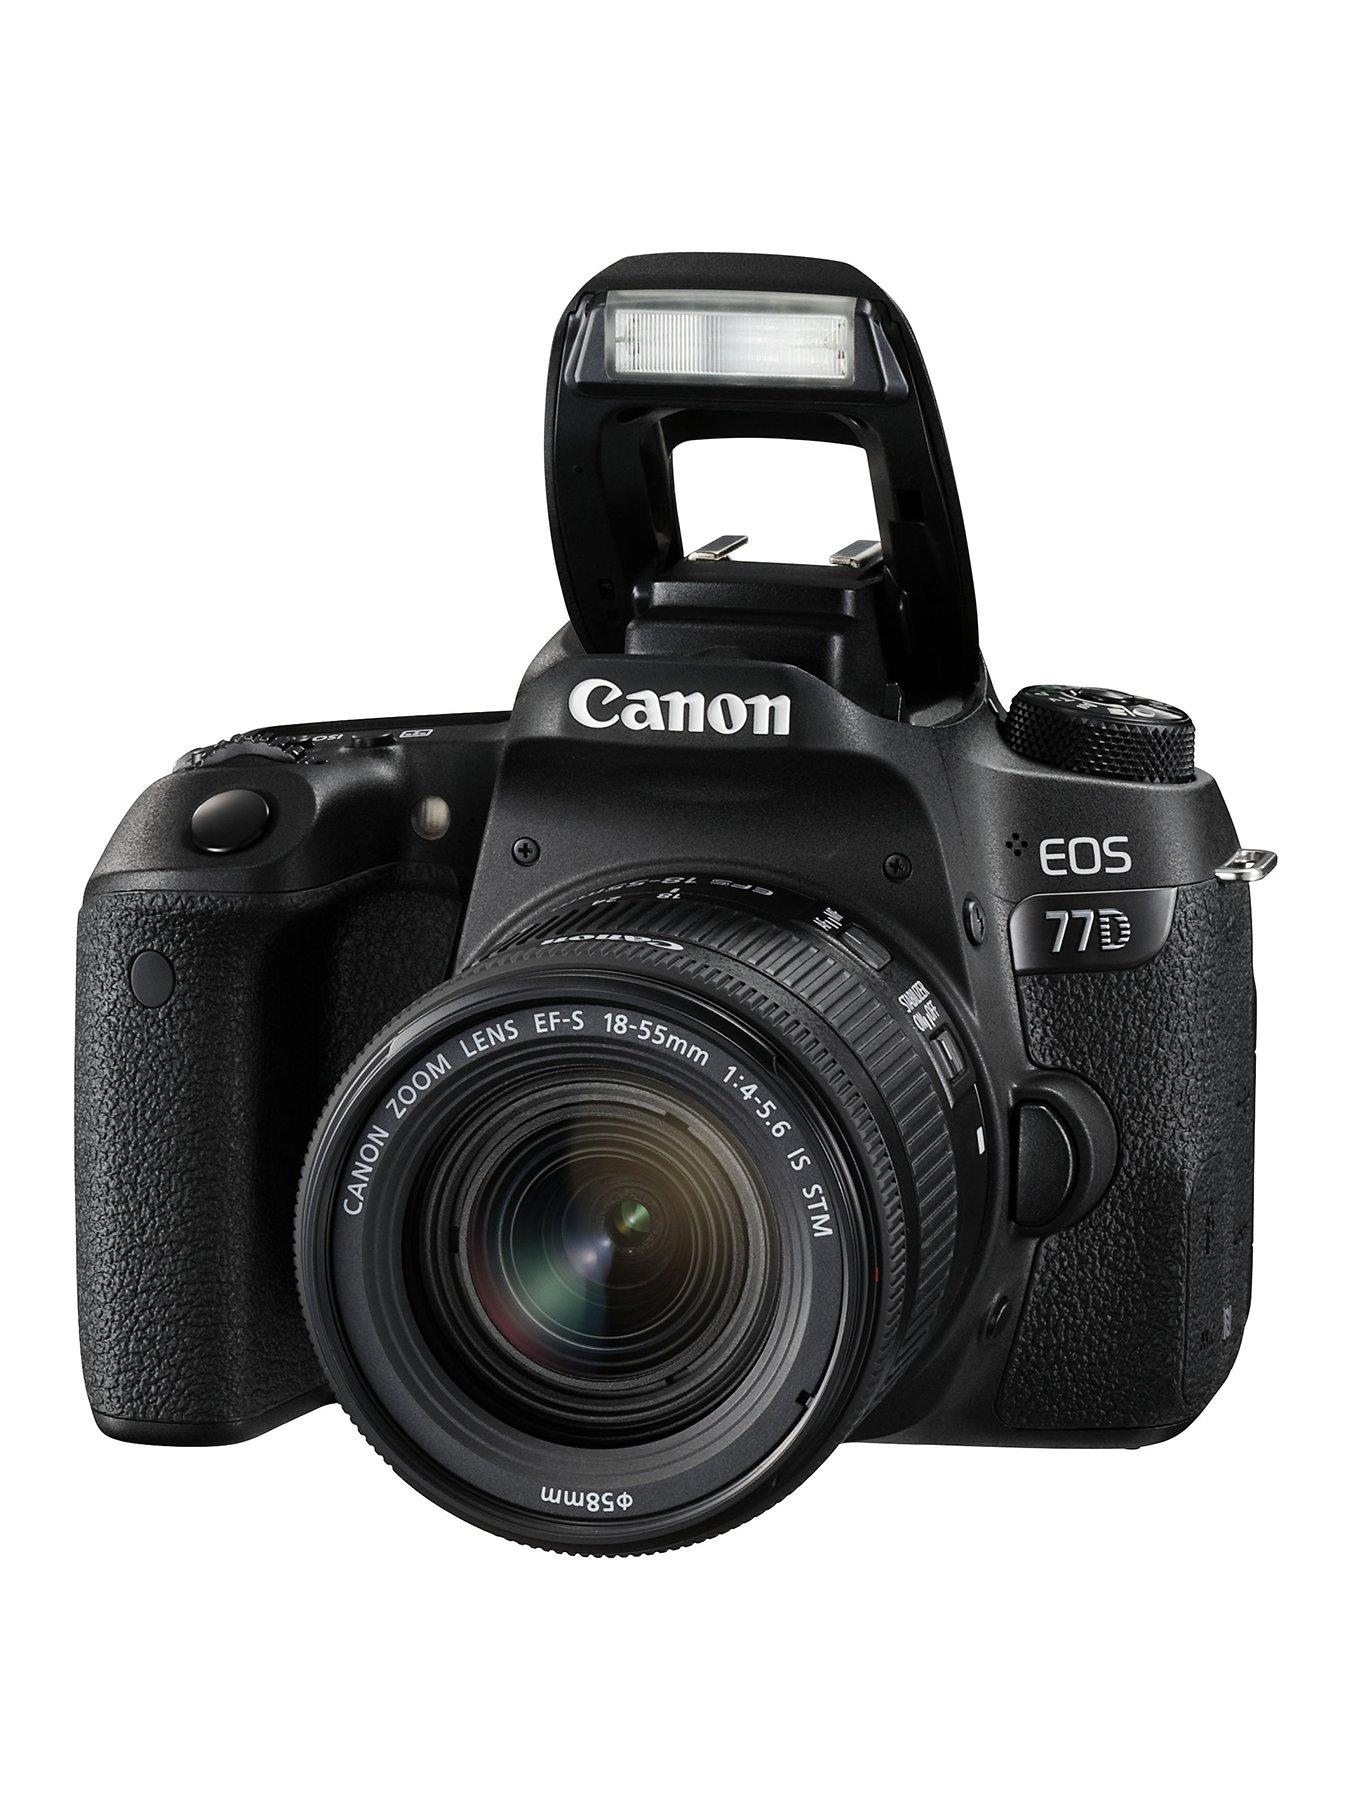 Canon Eos 77D Slr Camera Black Plus Ef-S 18-55Mm Is Stm Lens